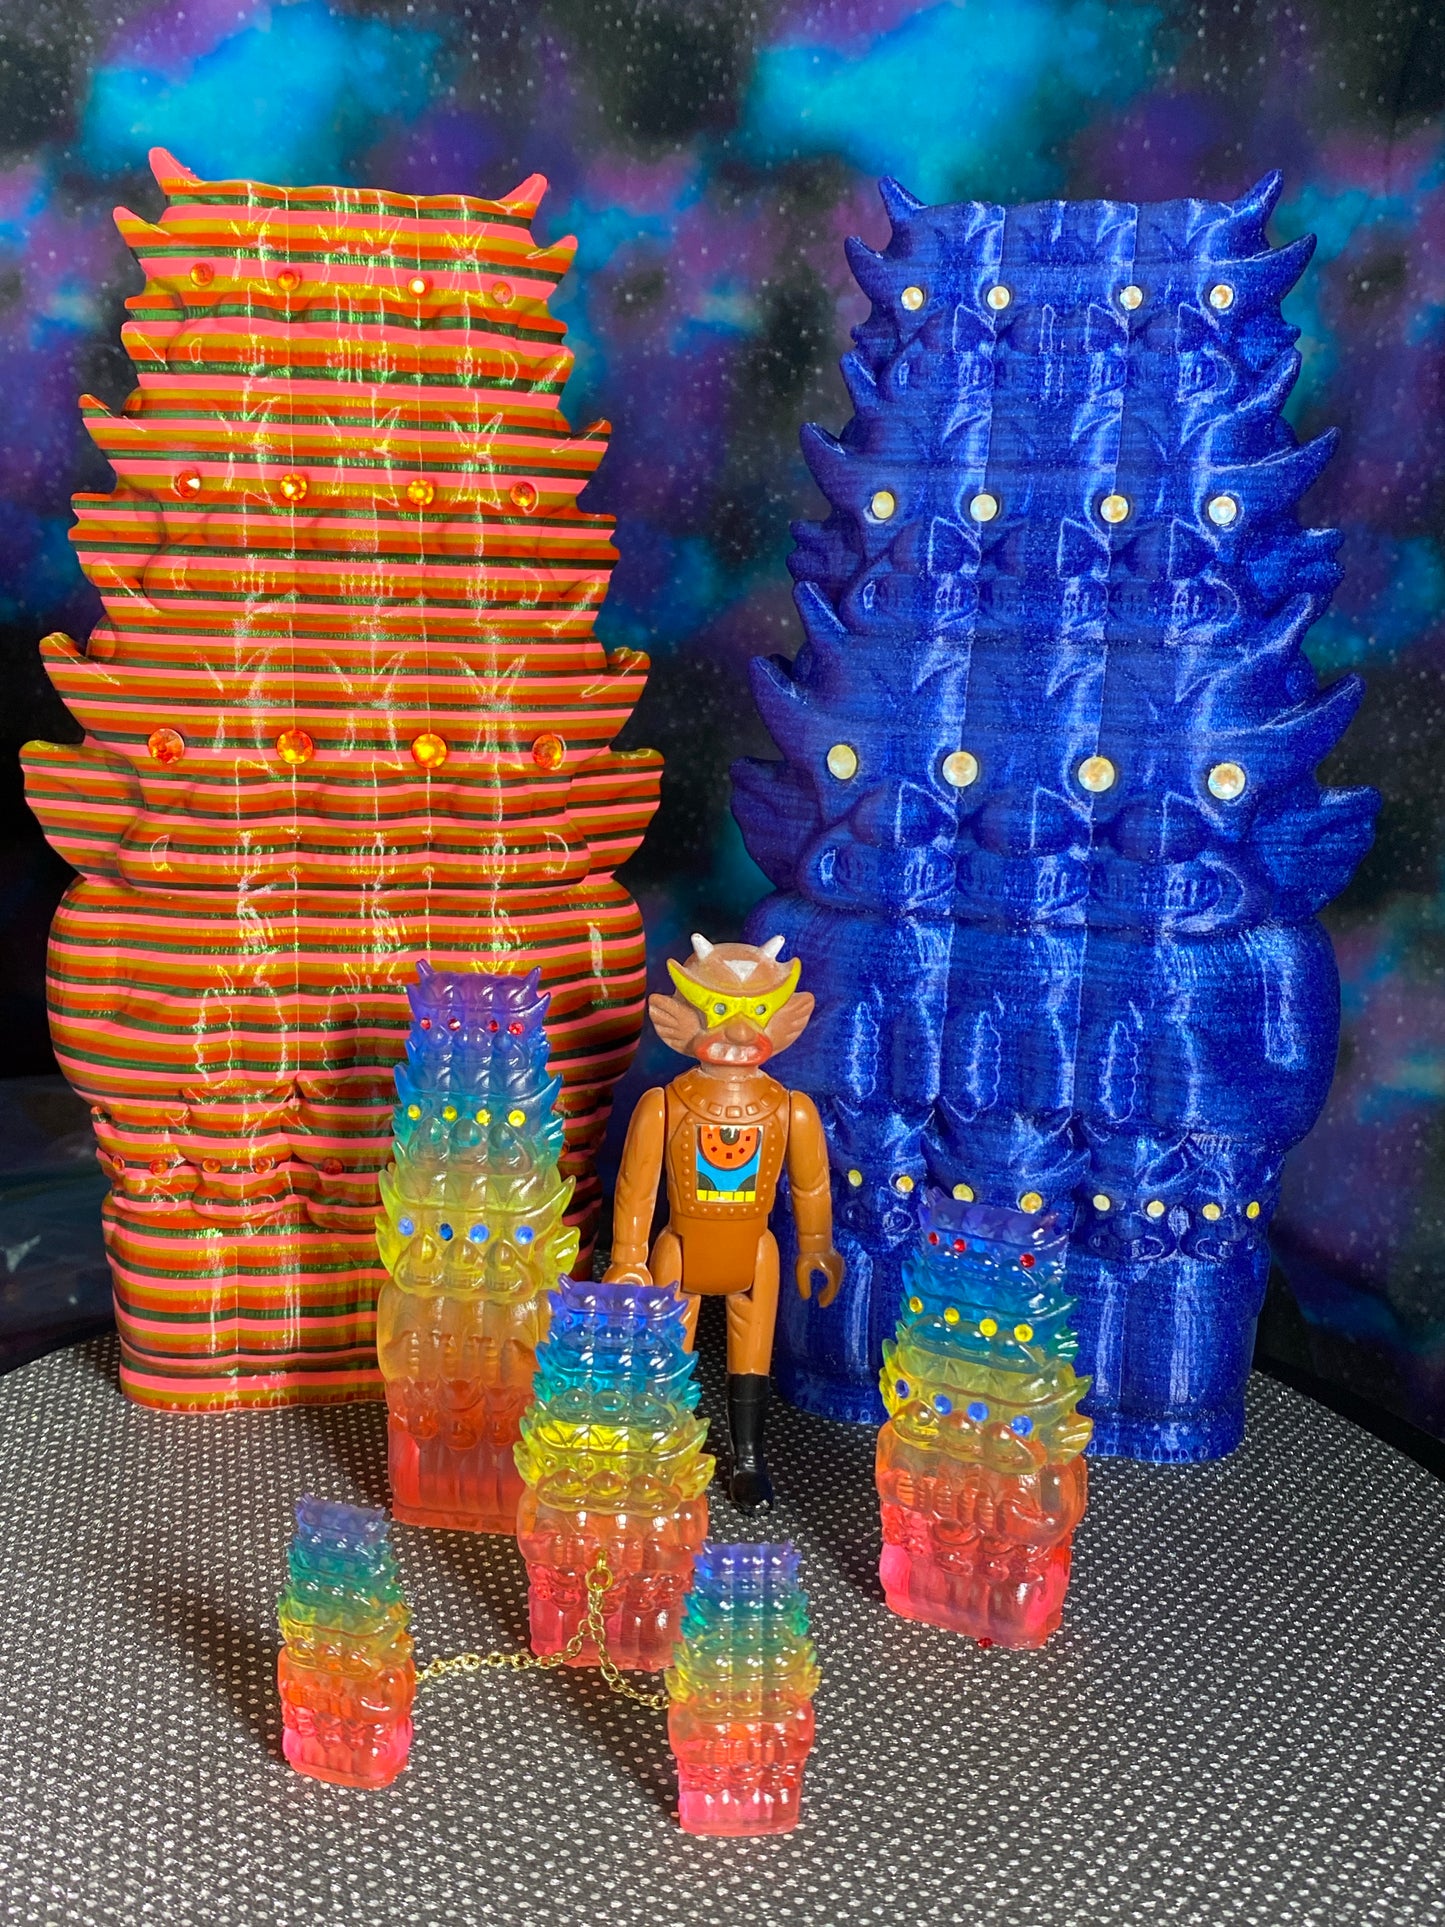 Aton Ape God of Space: The Rainbow Connection